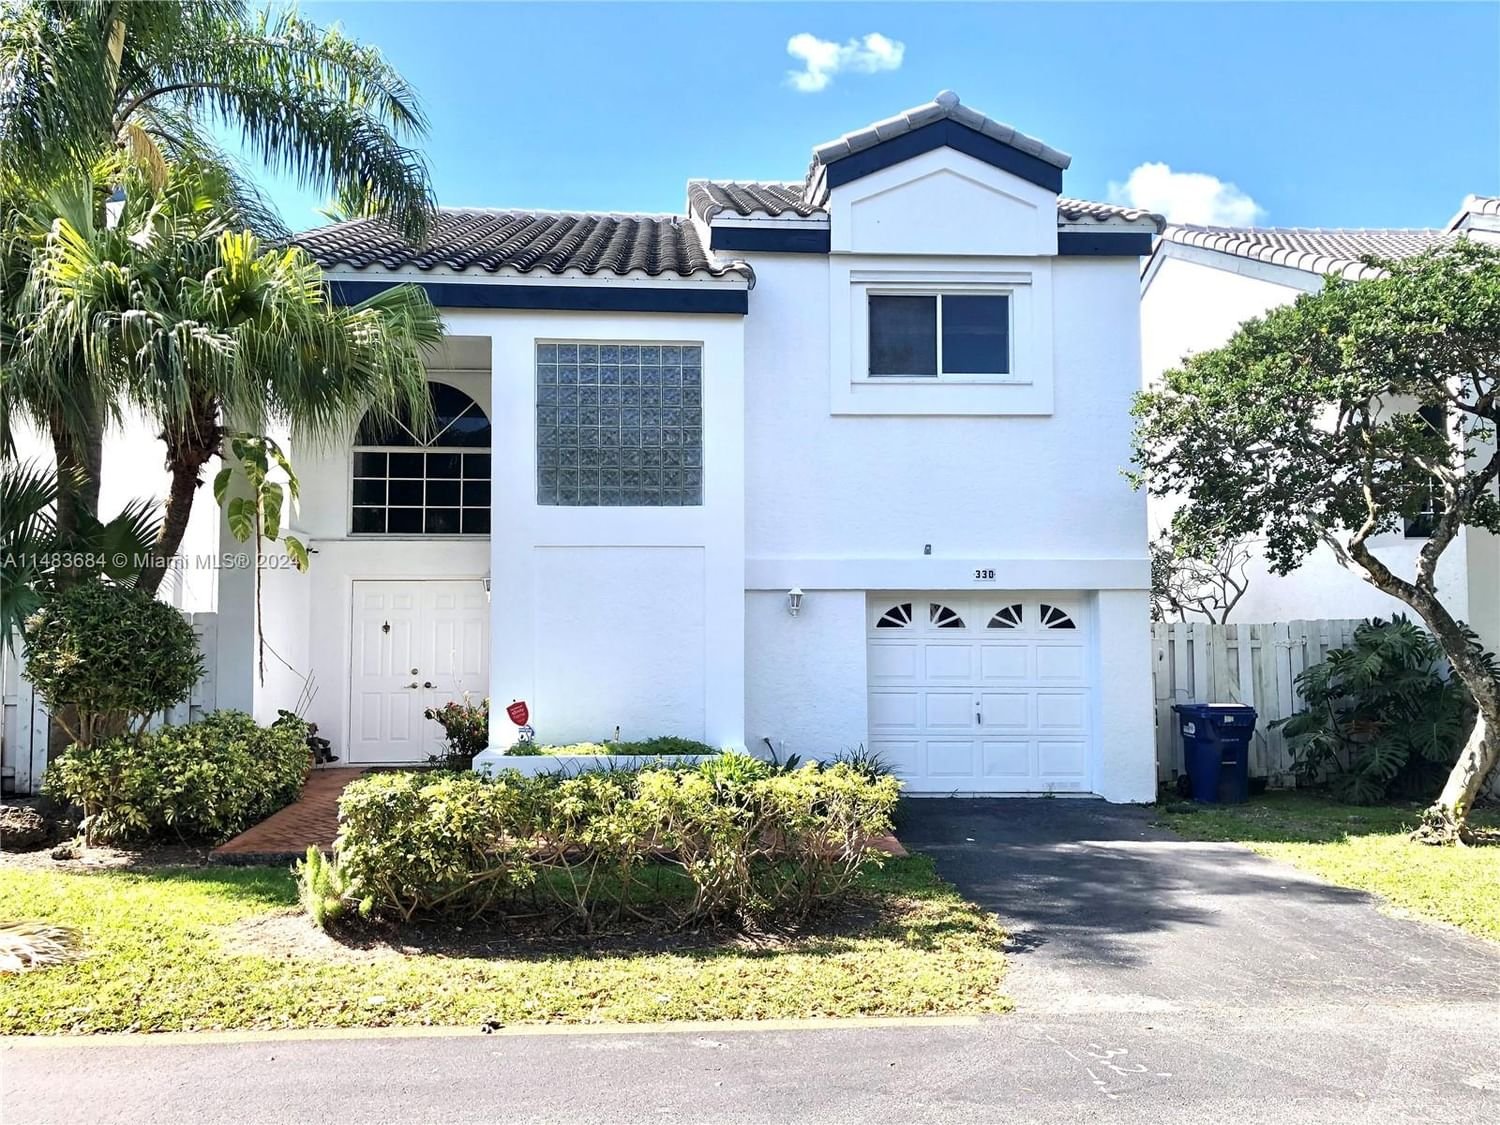 Real estate property located at 330 212th St, Miami-Dade County, SAN SIMEON HOMES, Miami, FL